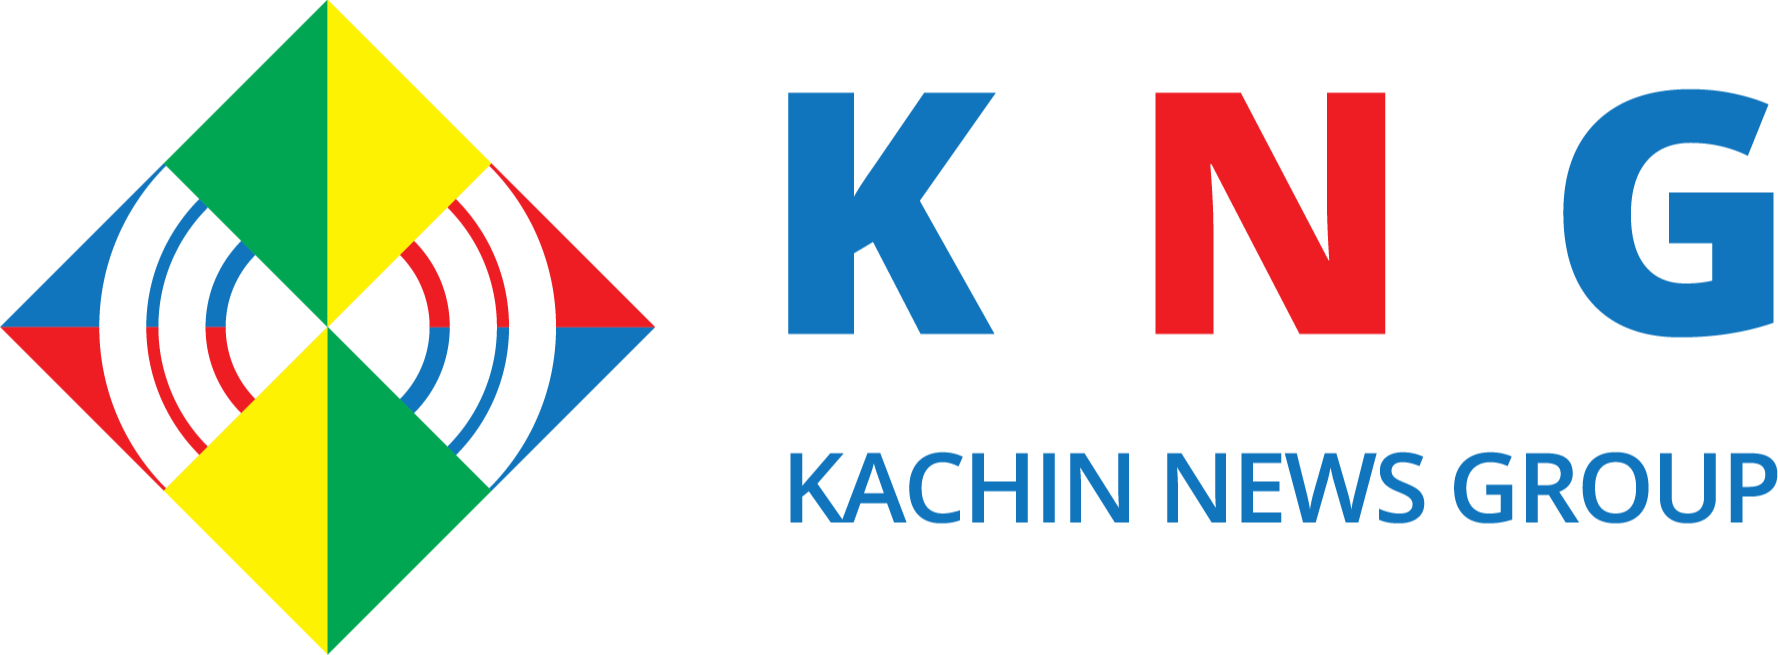 Kachin News Group logo